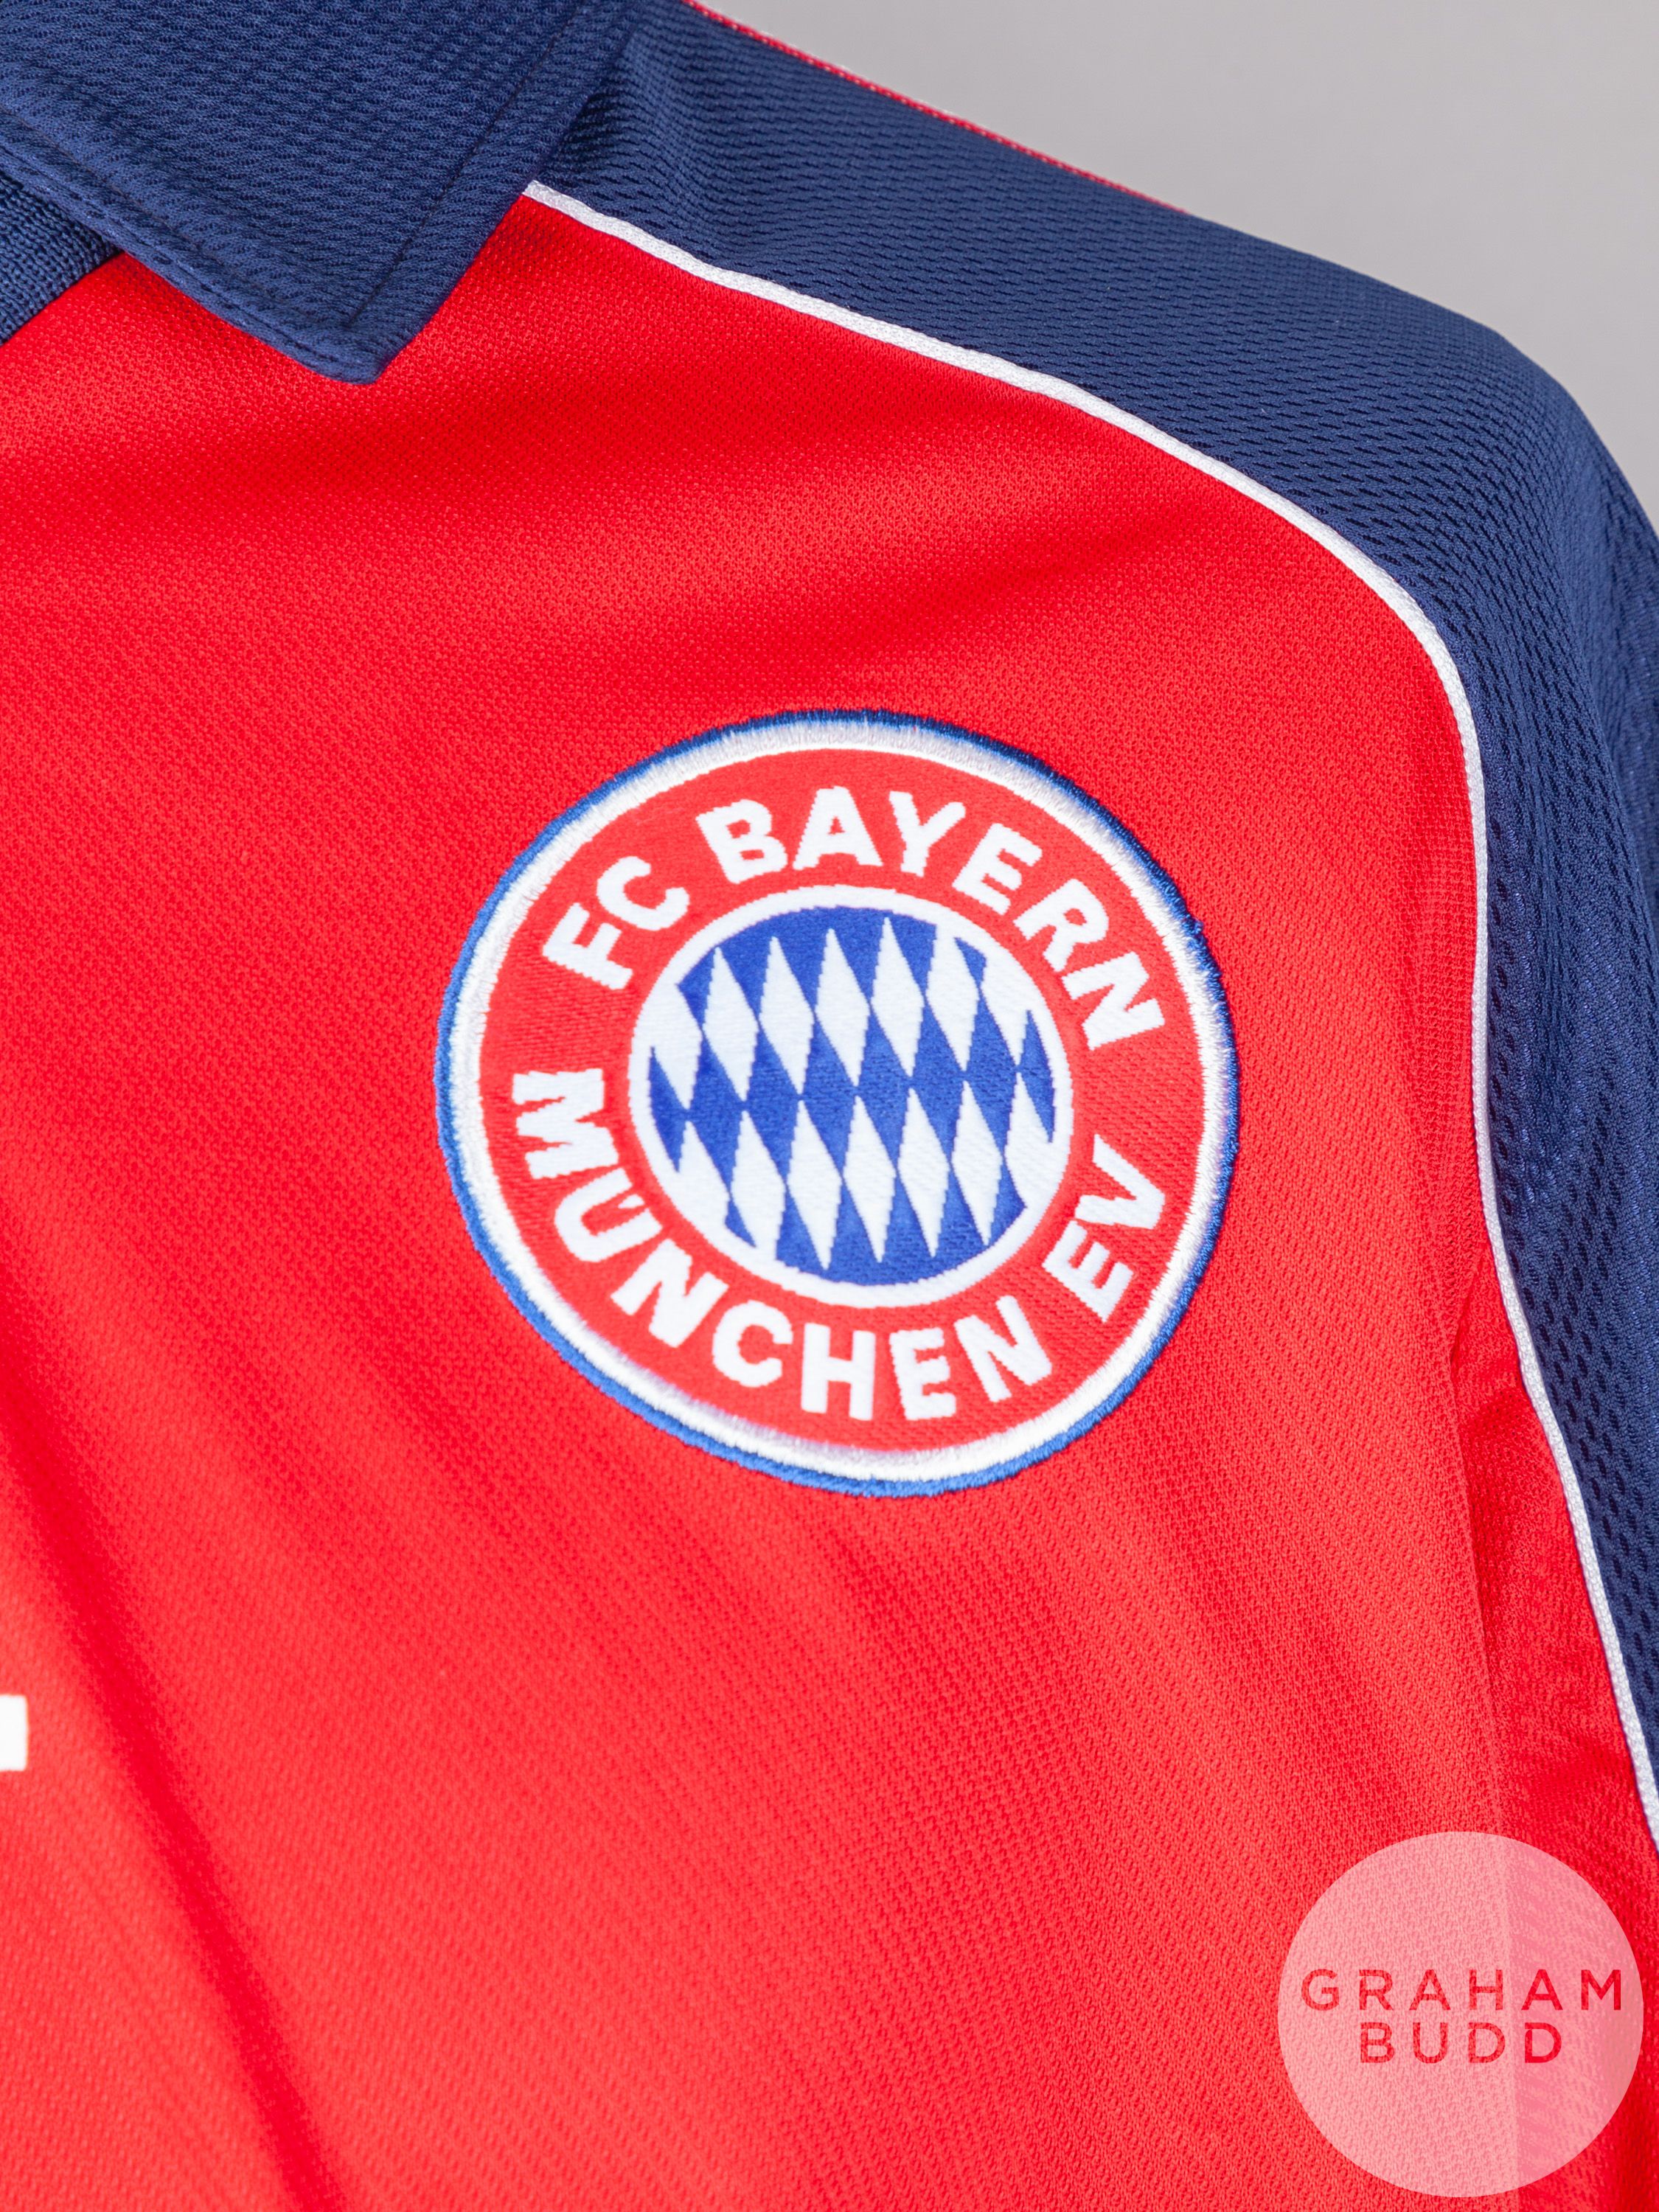 Markus Babbel red and blue No.2 Bayern Munich Champions League short-sleeved shirt - Image 3 of 6